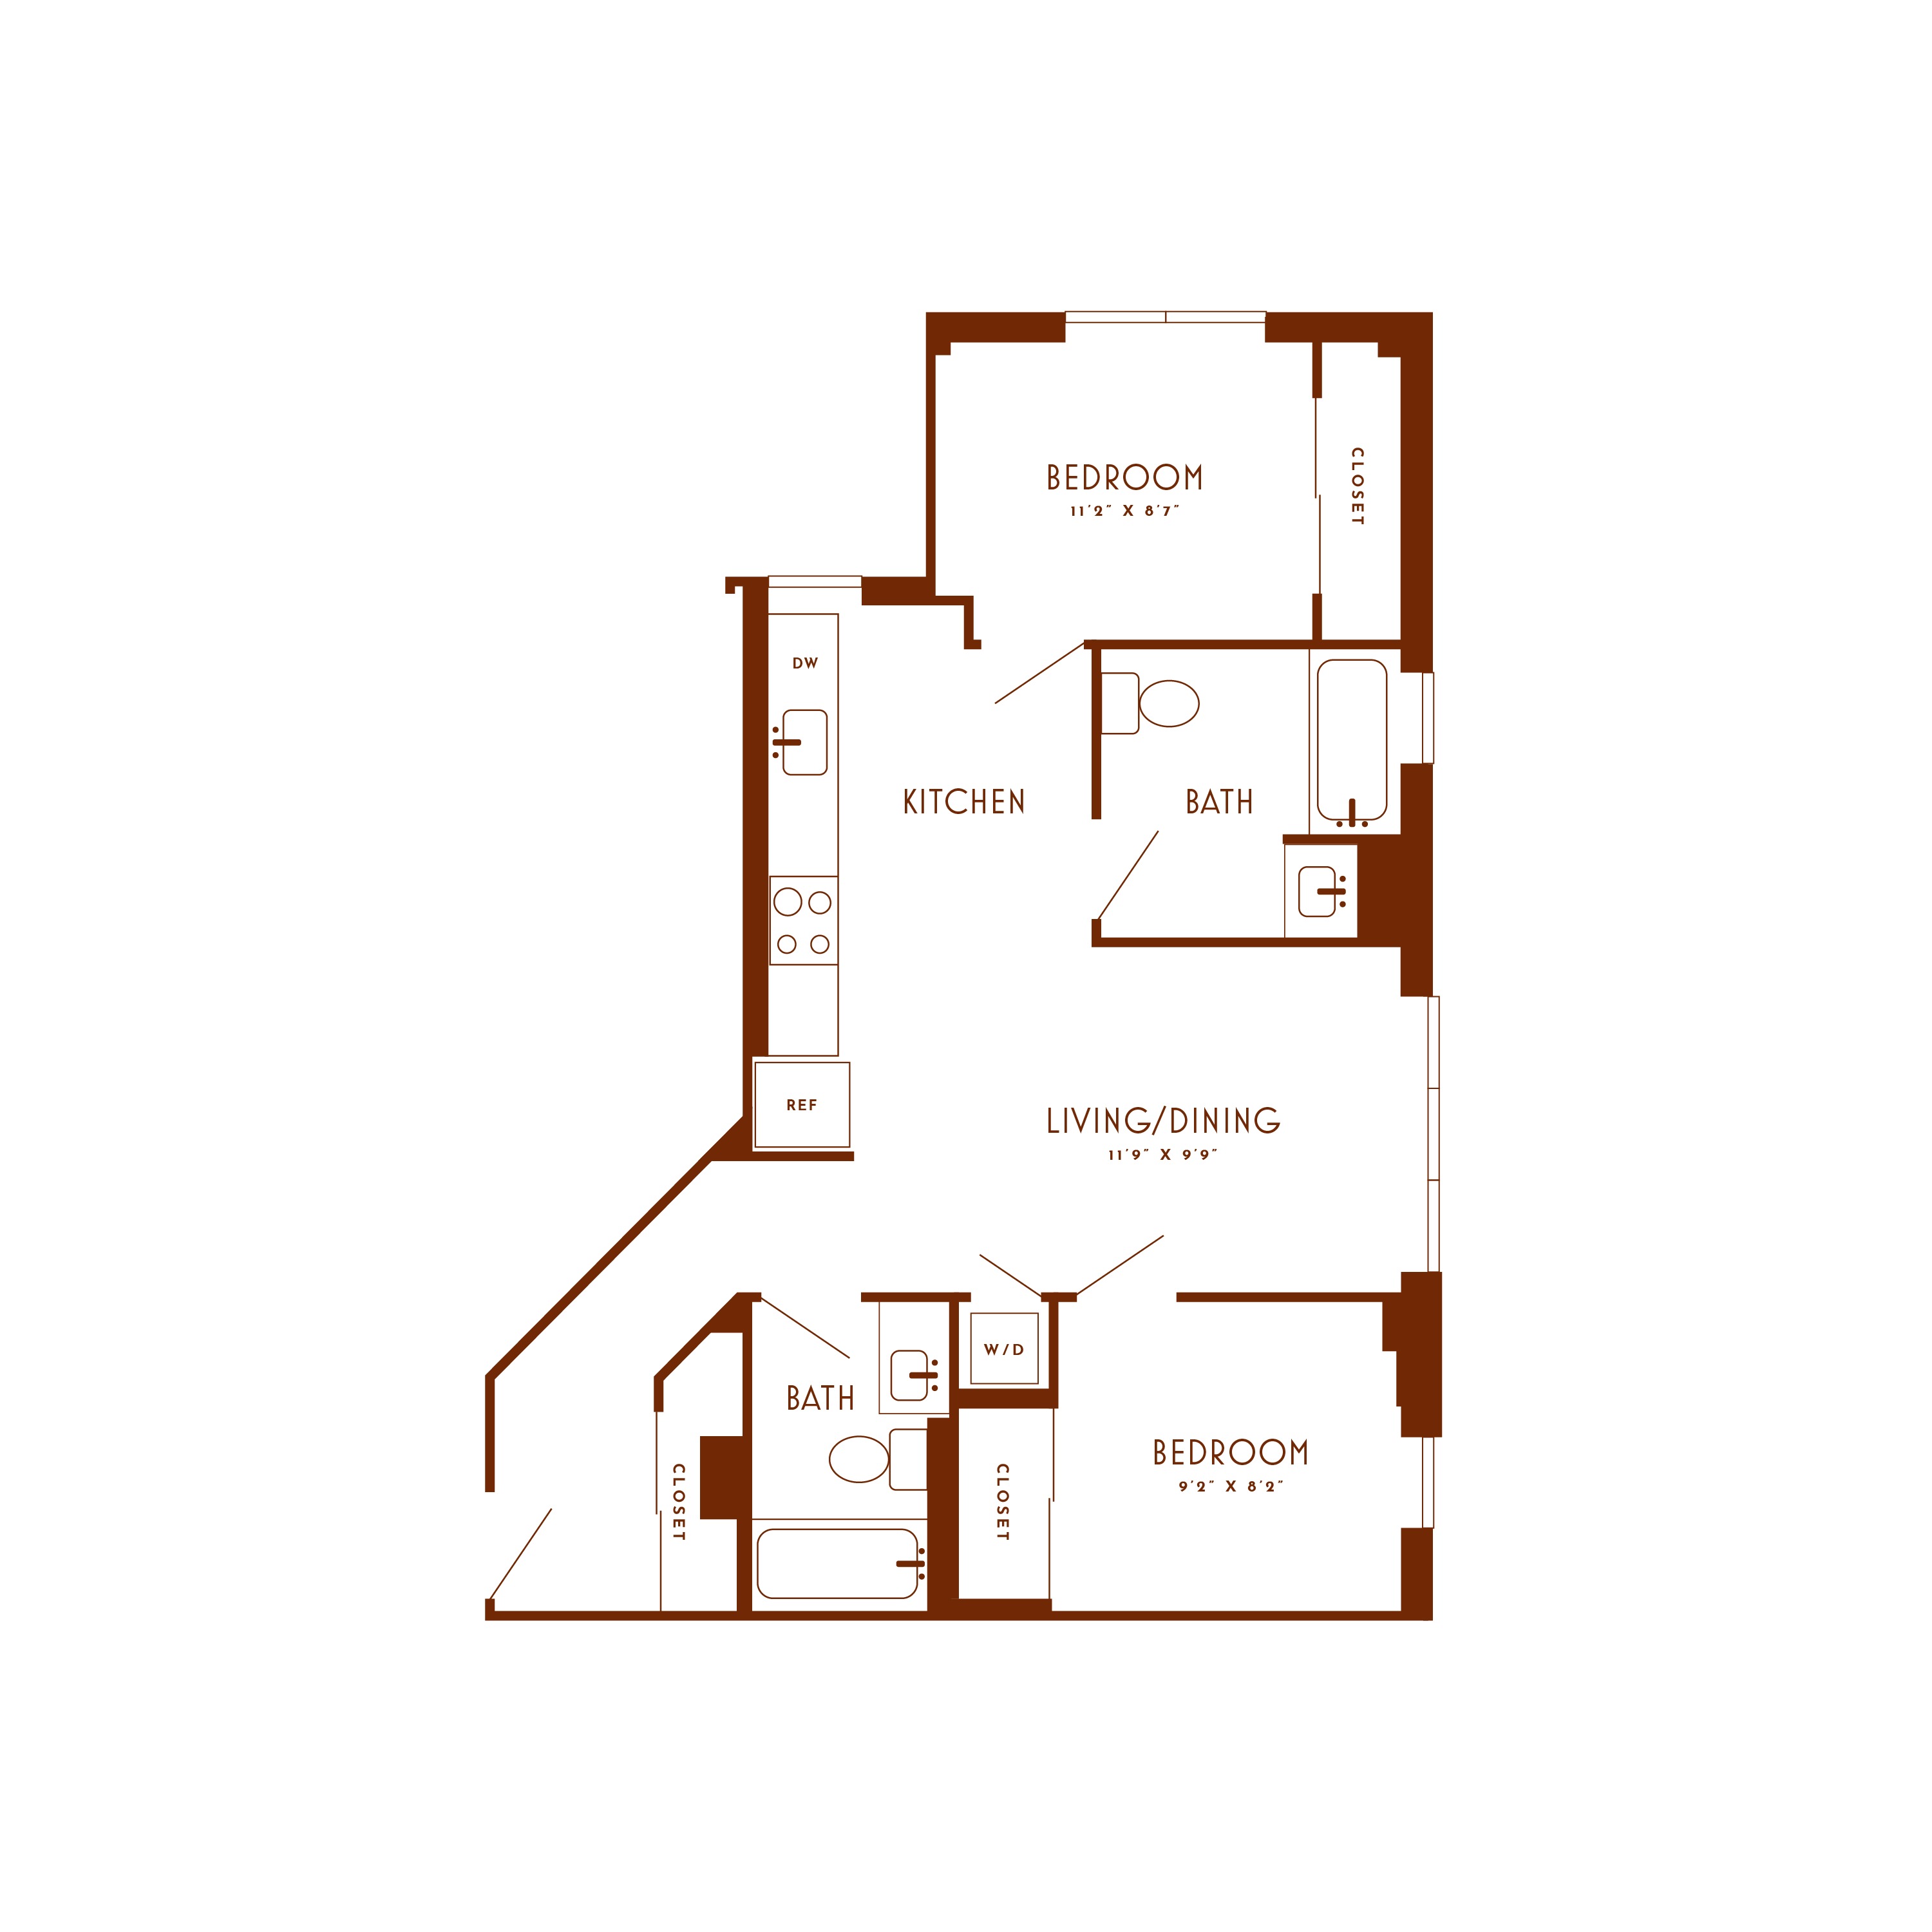 Floor plan image of unit 119